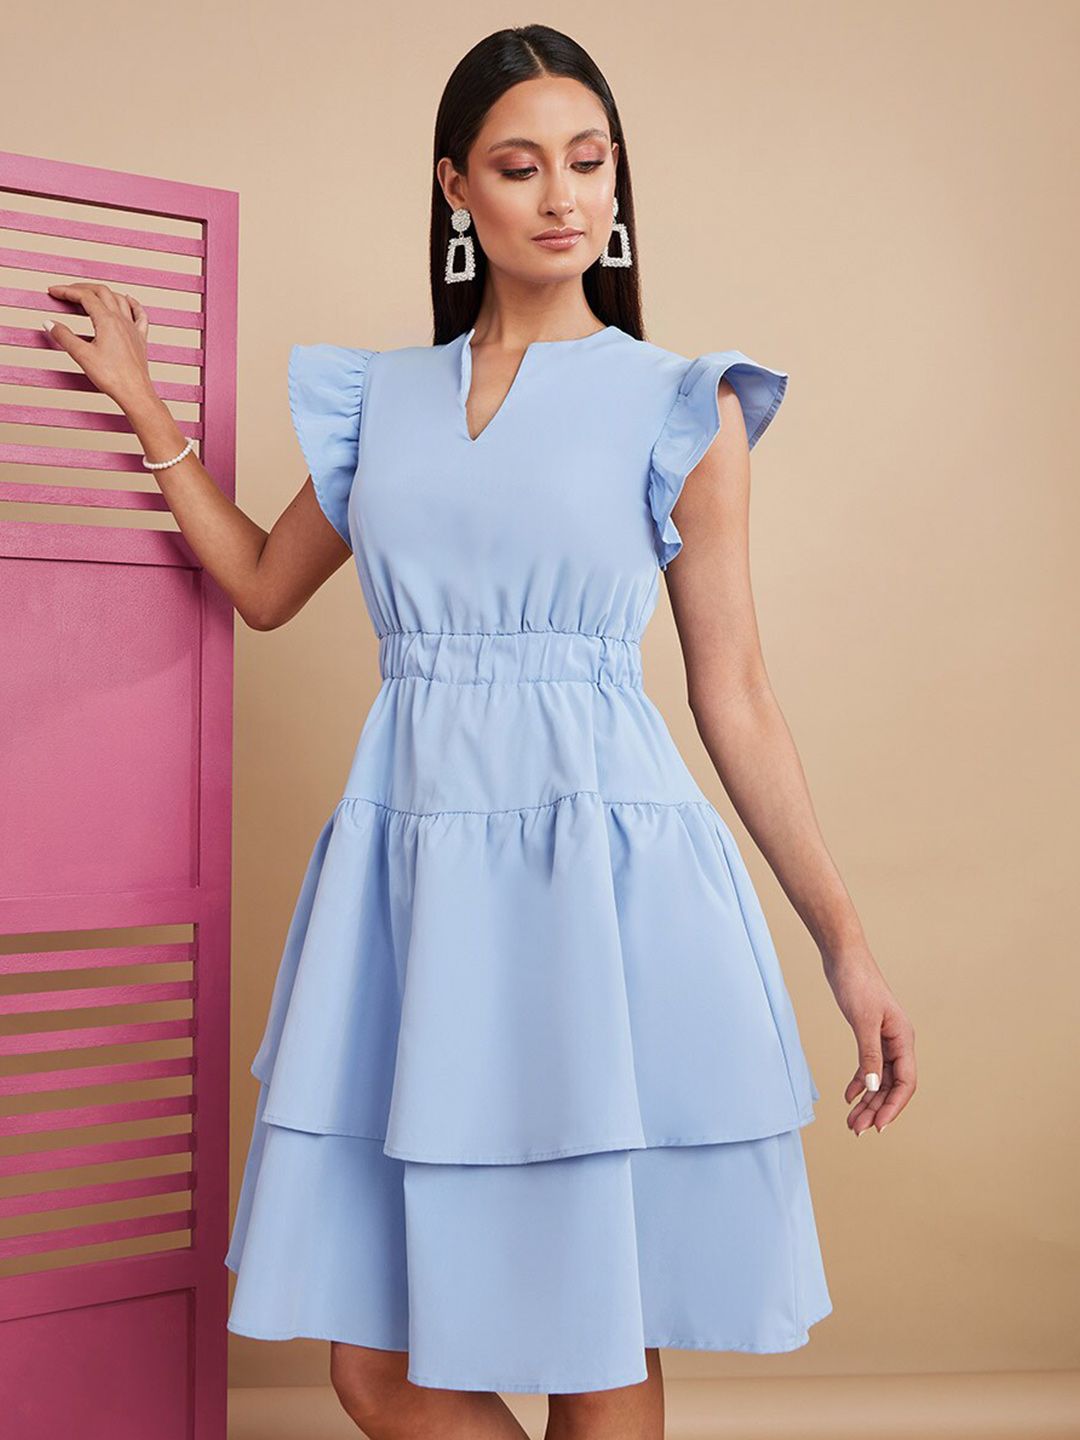 Styli Blue Dress Price in India